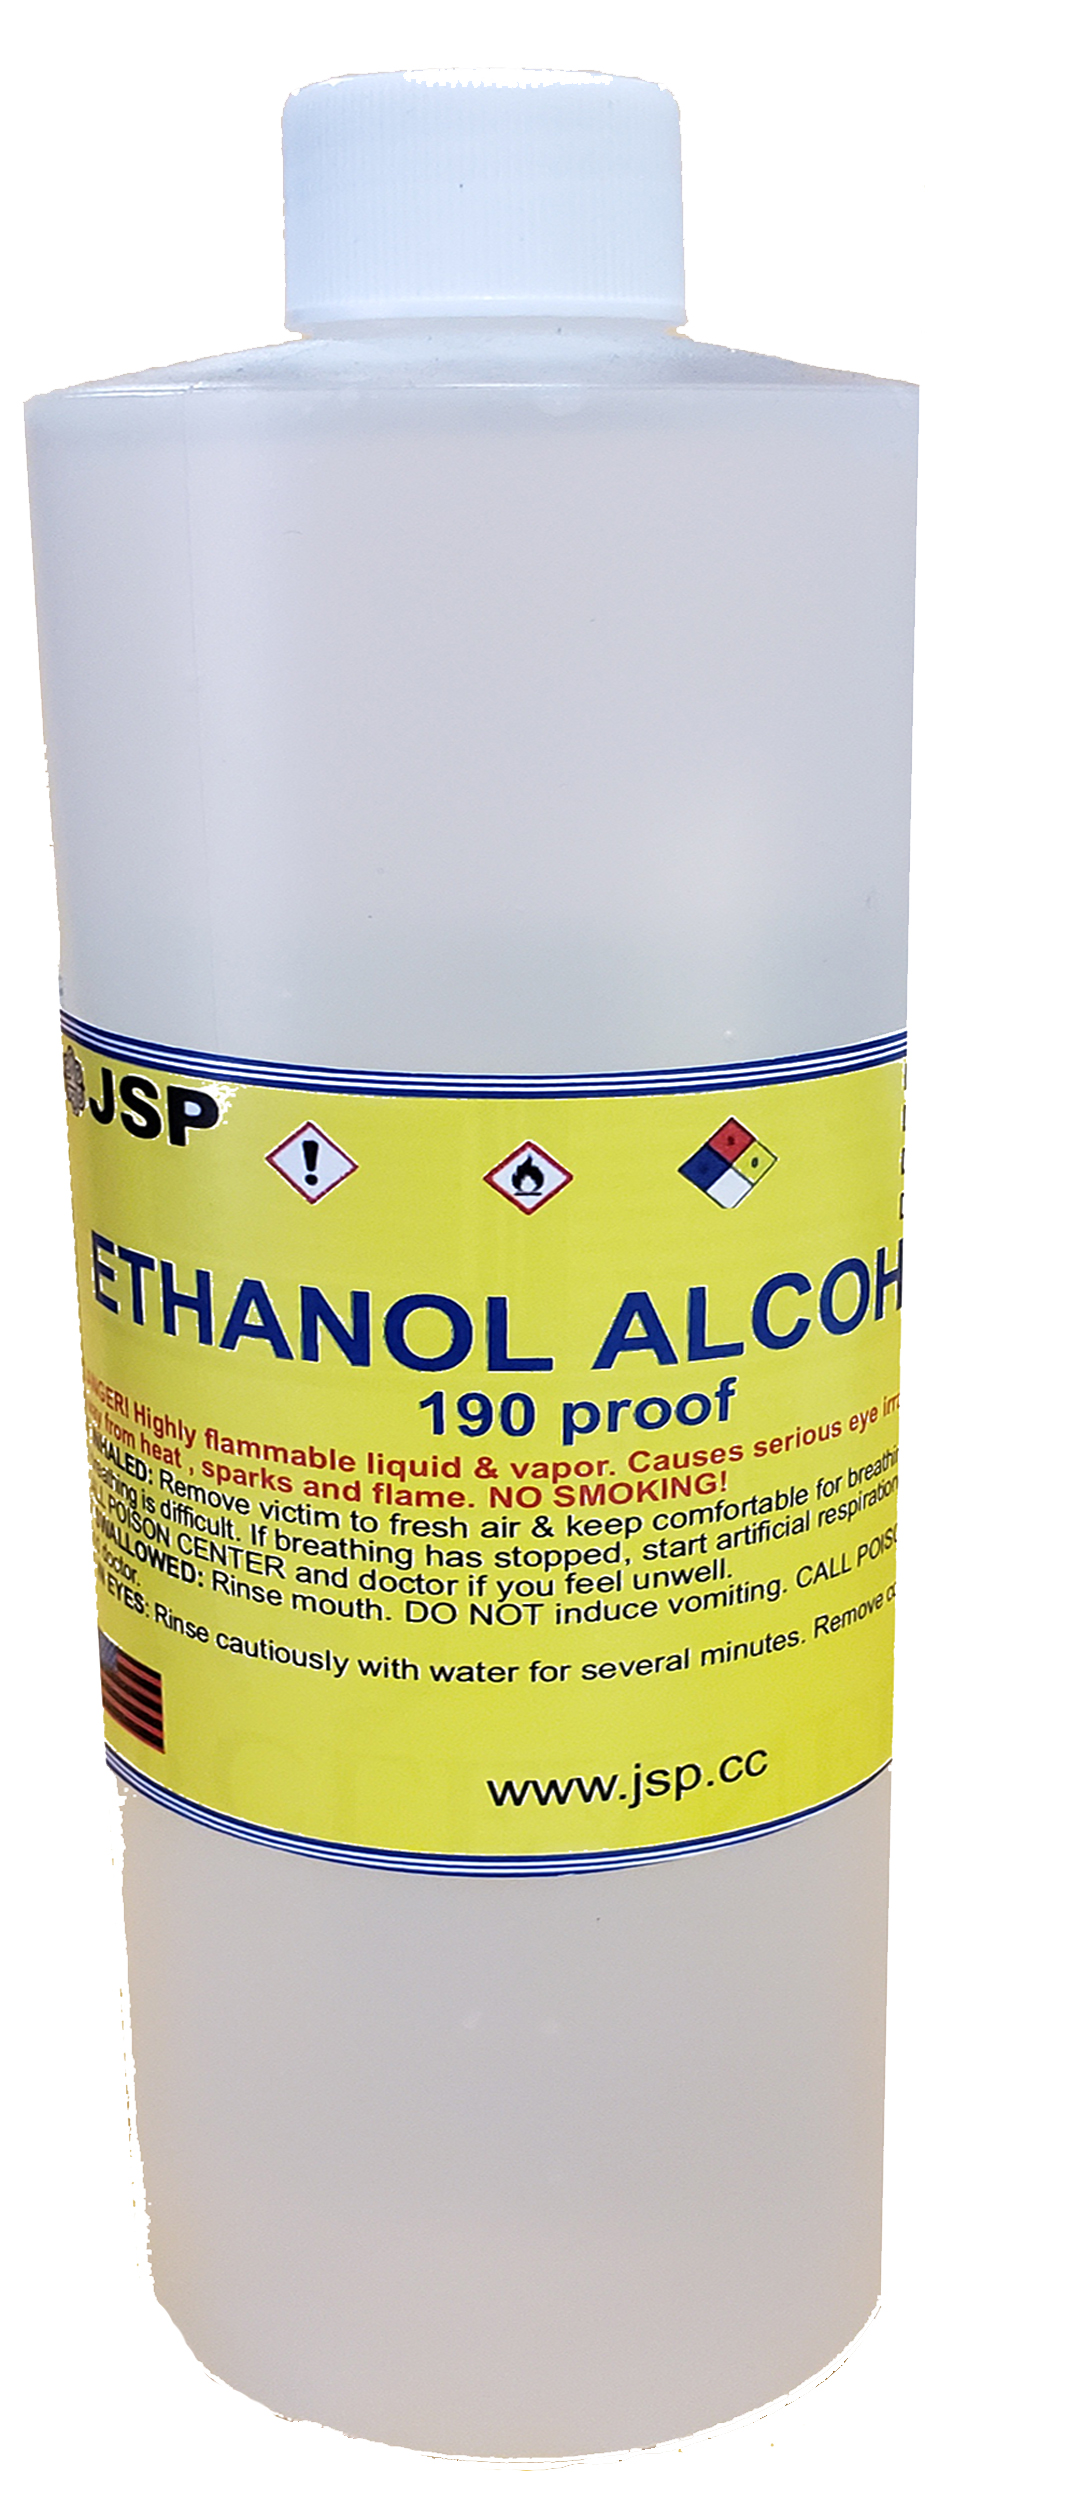 ETHANOL ALCOHOL 190 proof 32oz